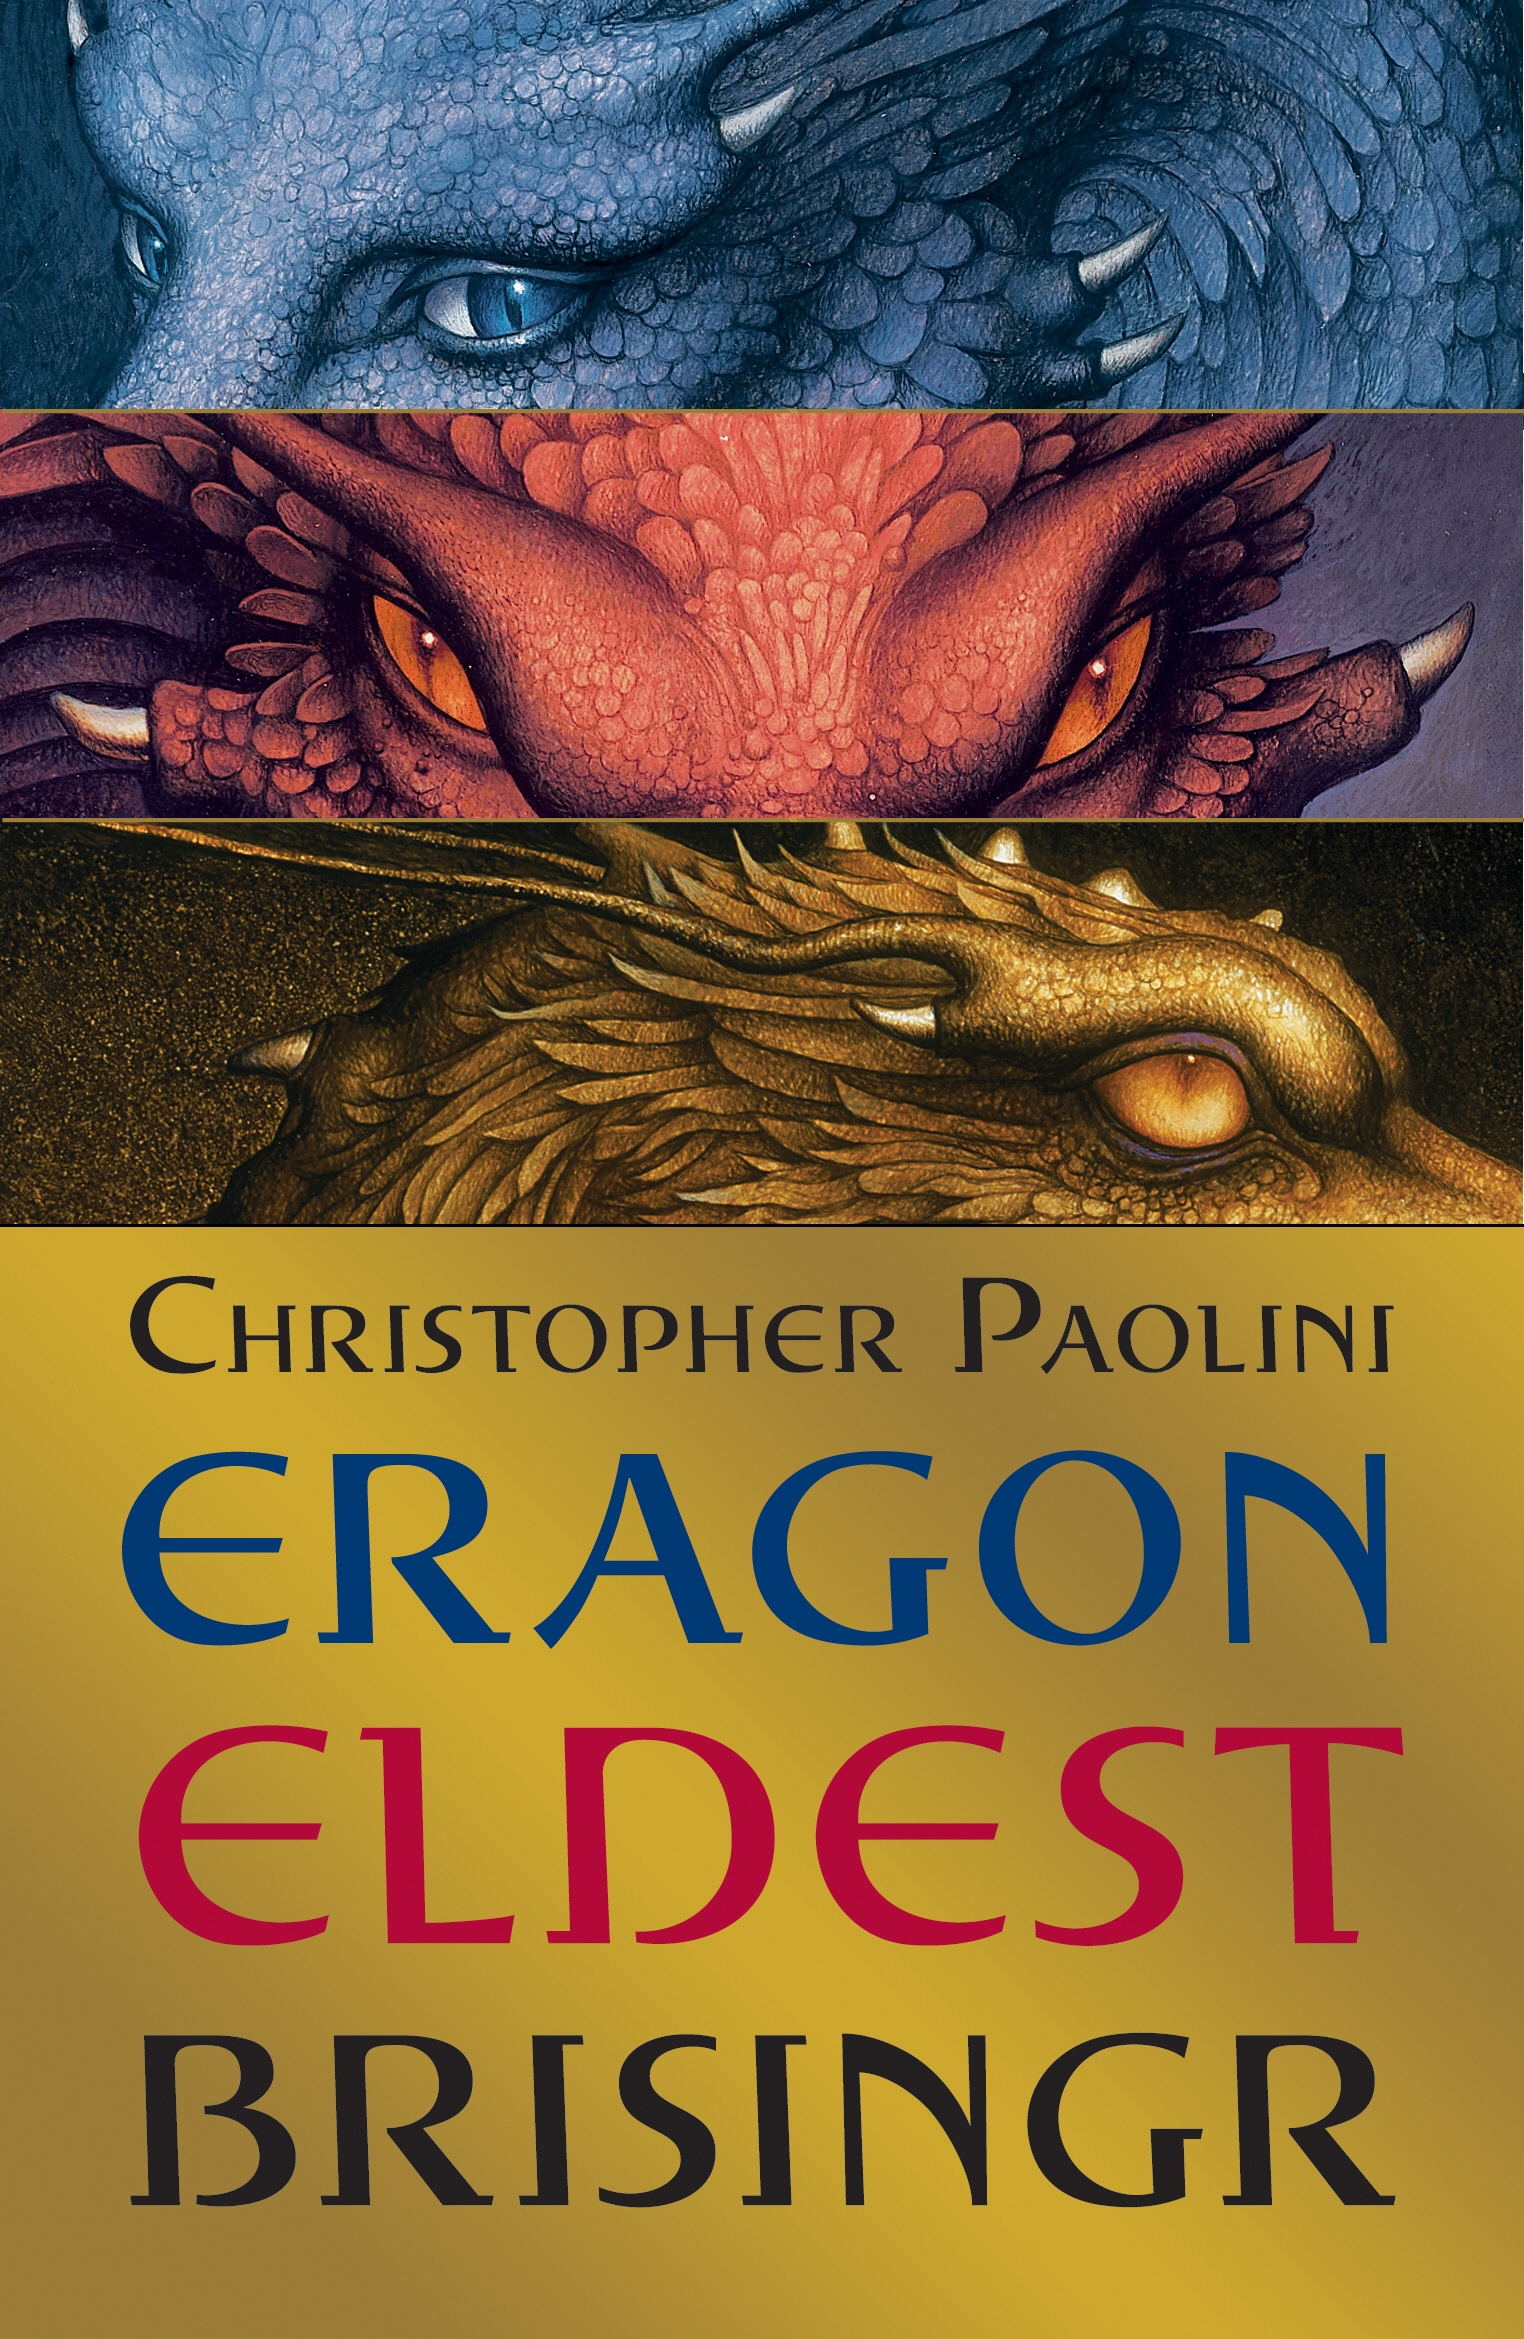 Eragon, Eldest, Brisingr Omnibus by Christopher Paolini Penguin Books